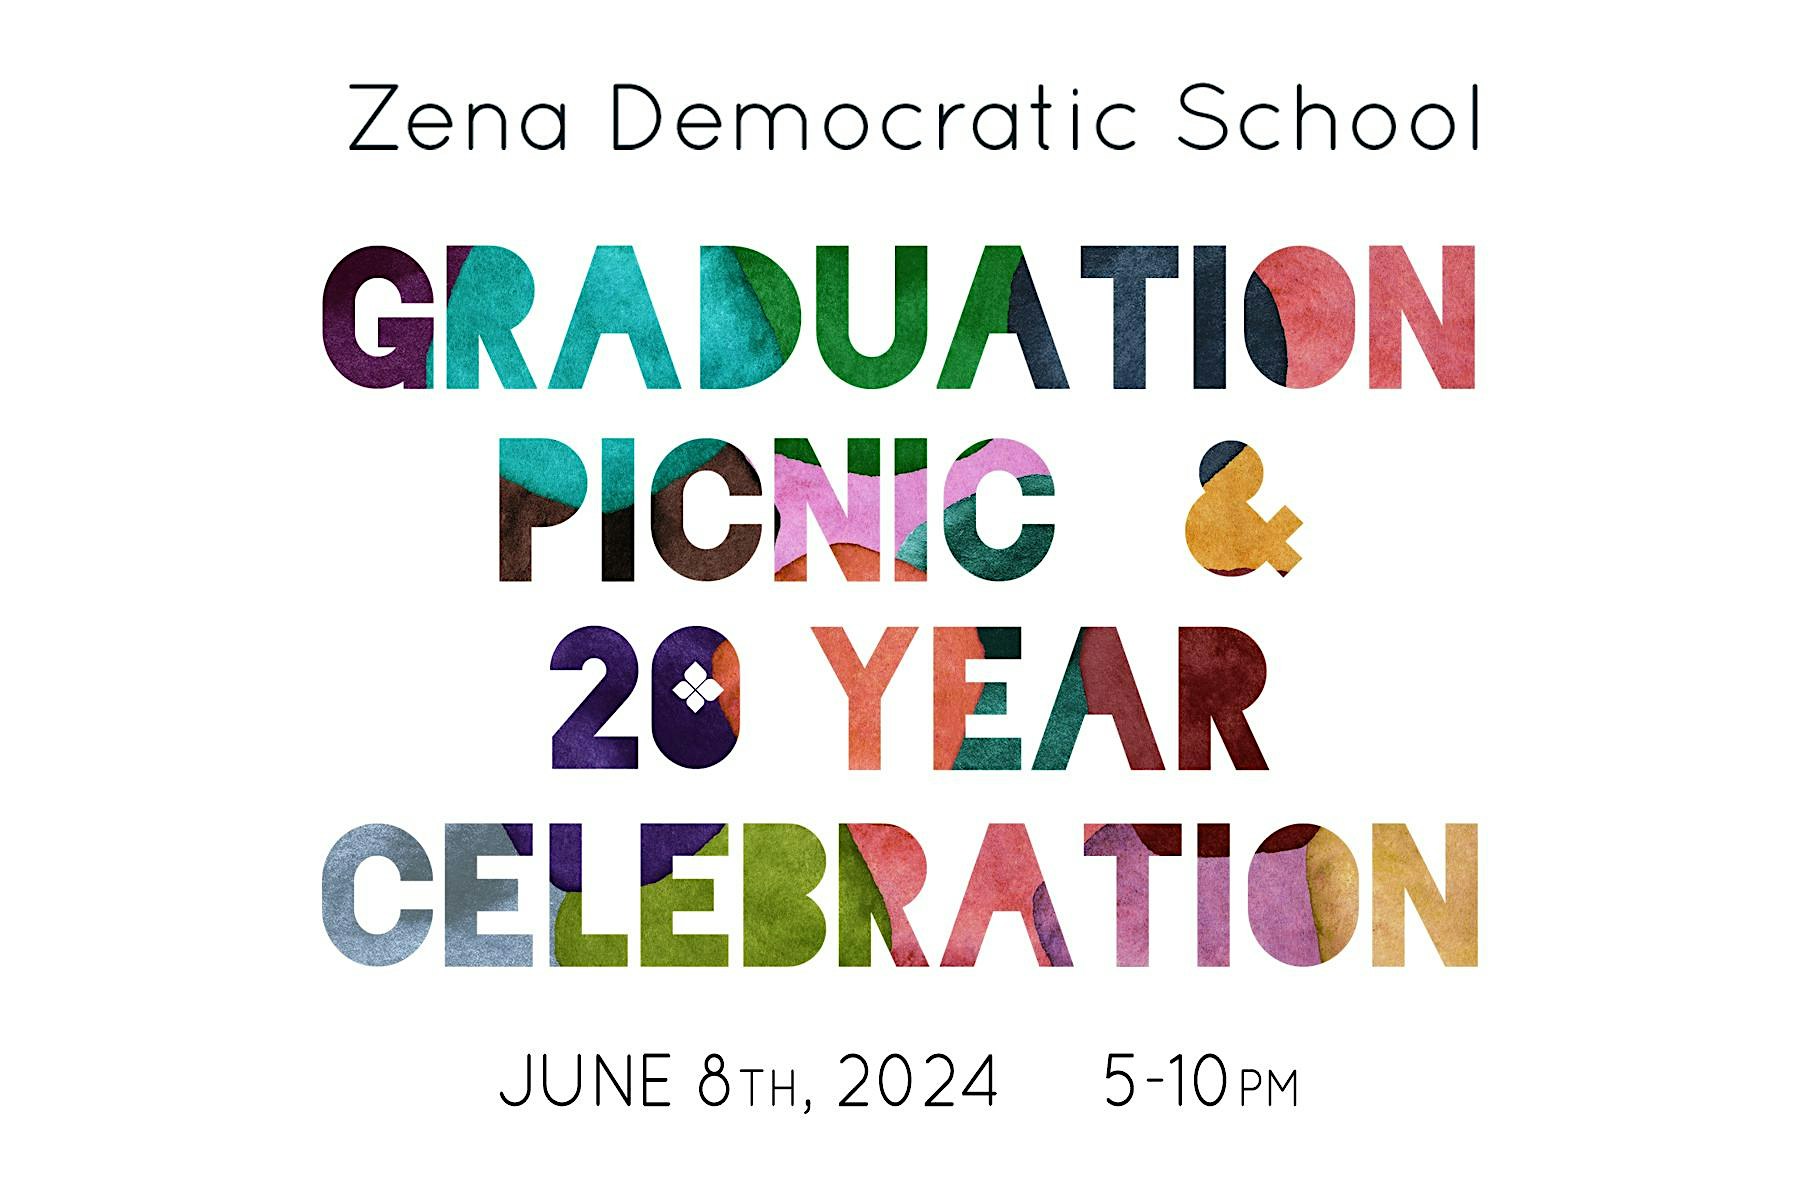 ZDS Graduation Picnic & 20 Year Celebration